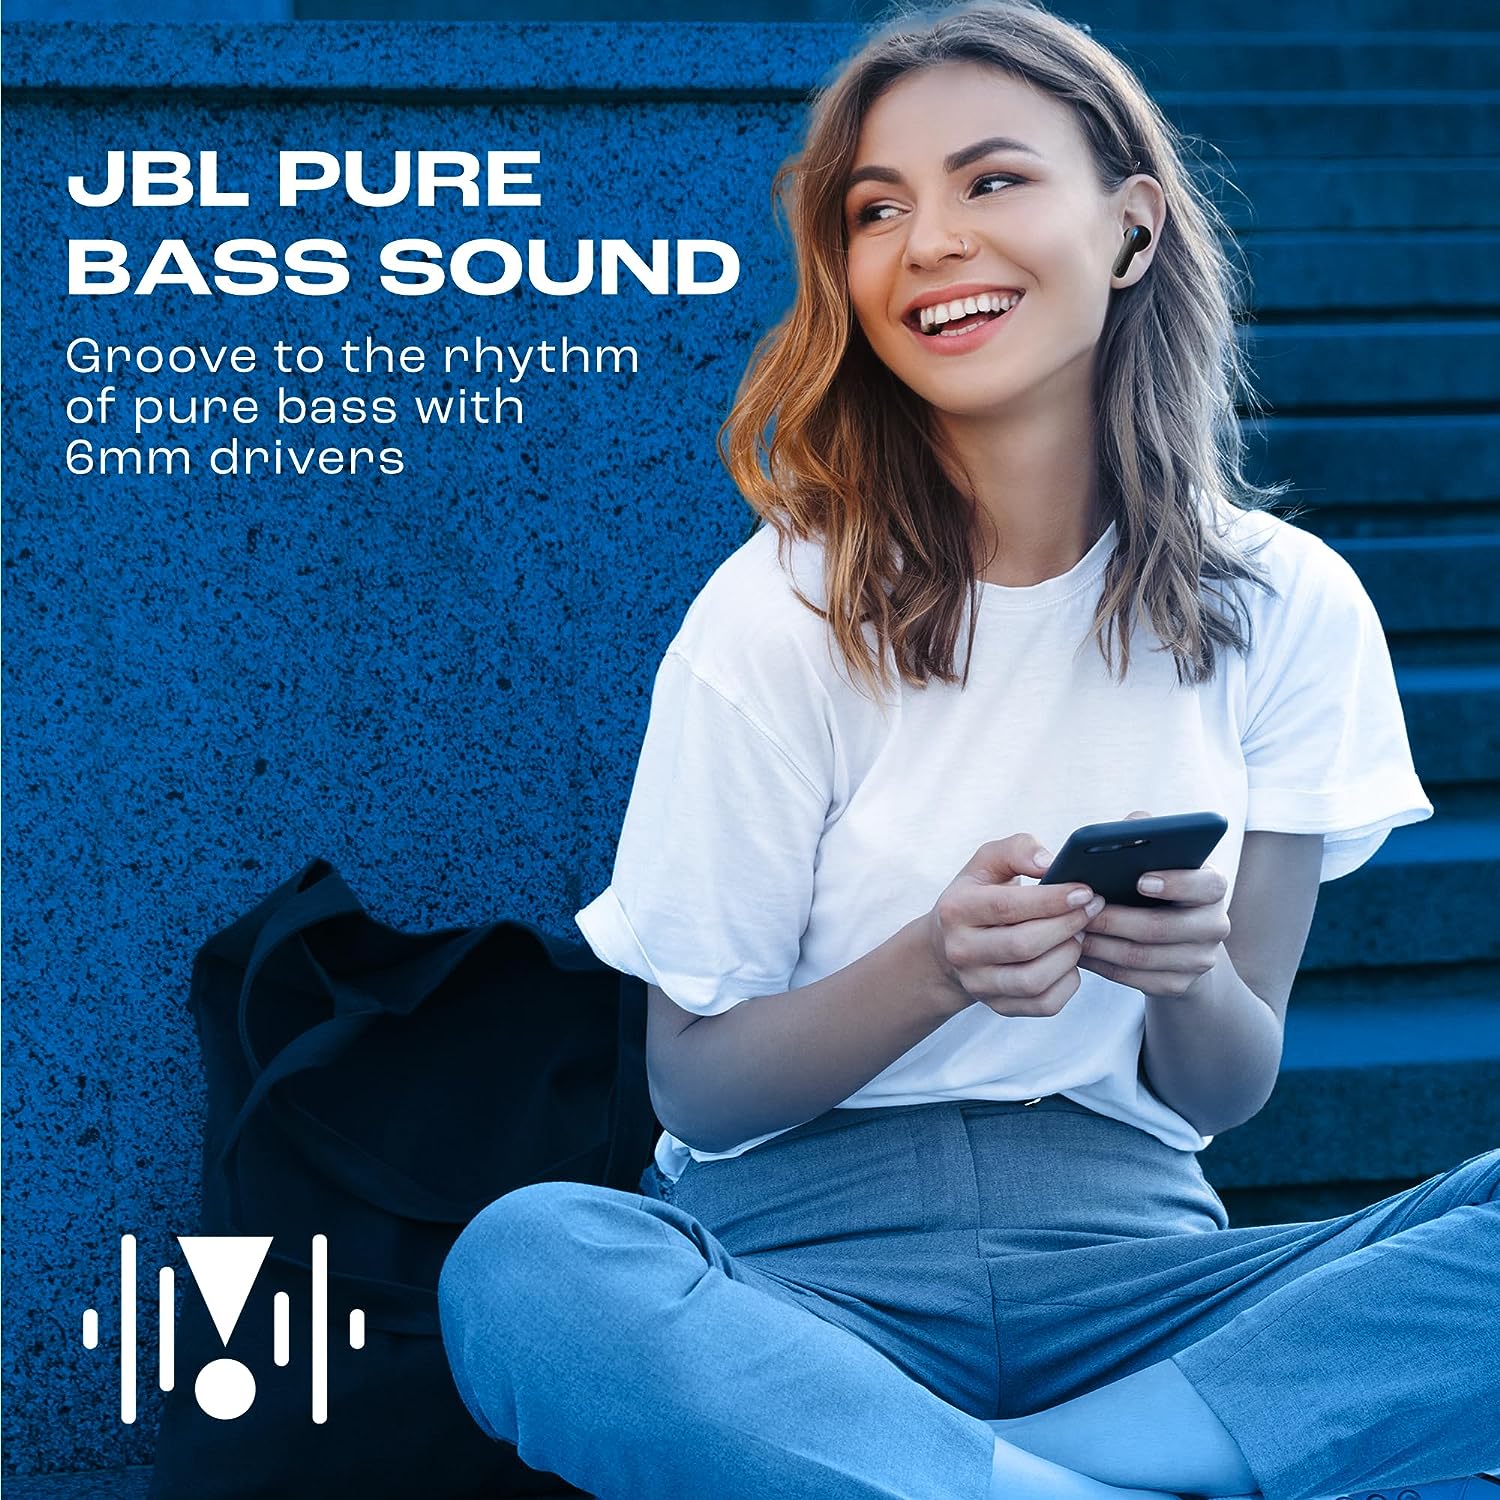 JBL Tune 235NC in Ear Wireless ANC Earbuds (TWS), Massive 40Hrs